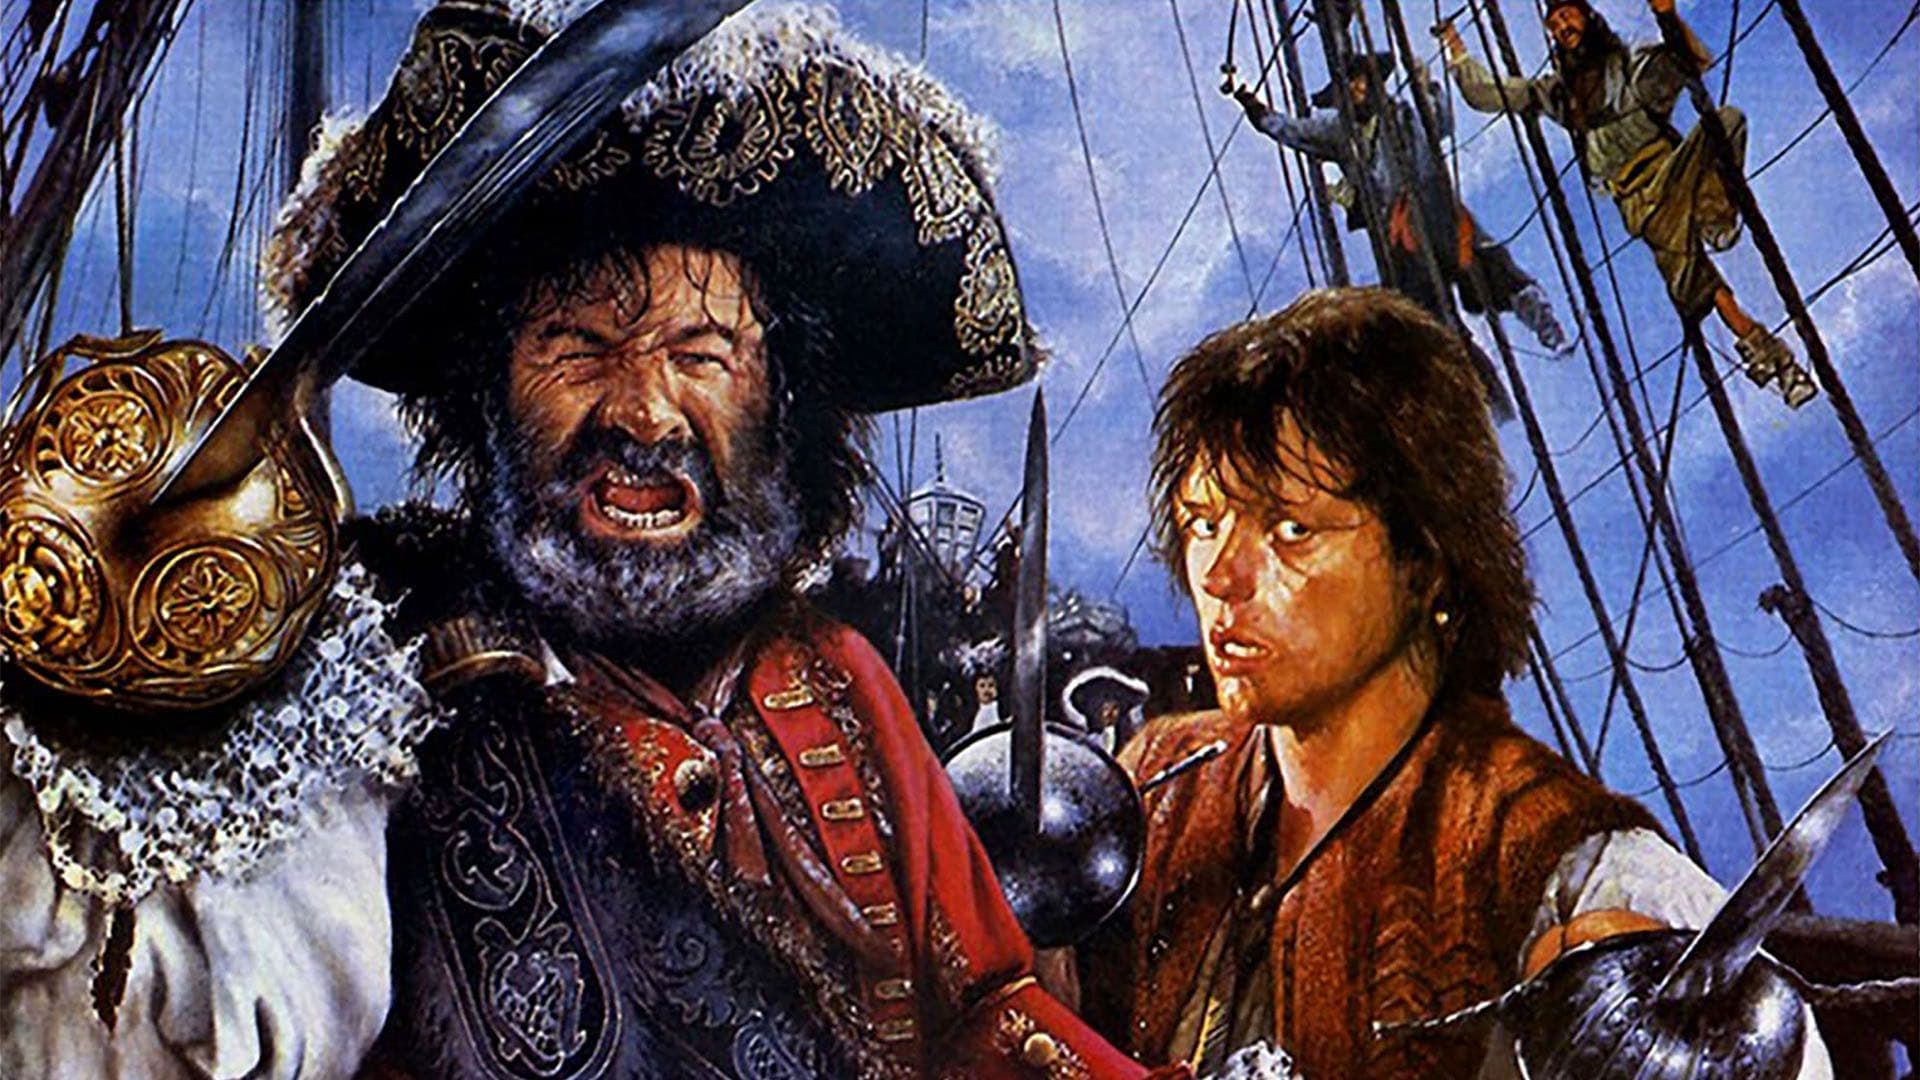 Pirates background